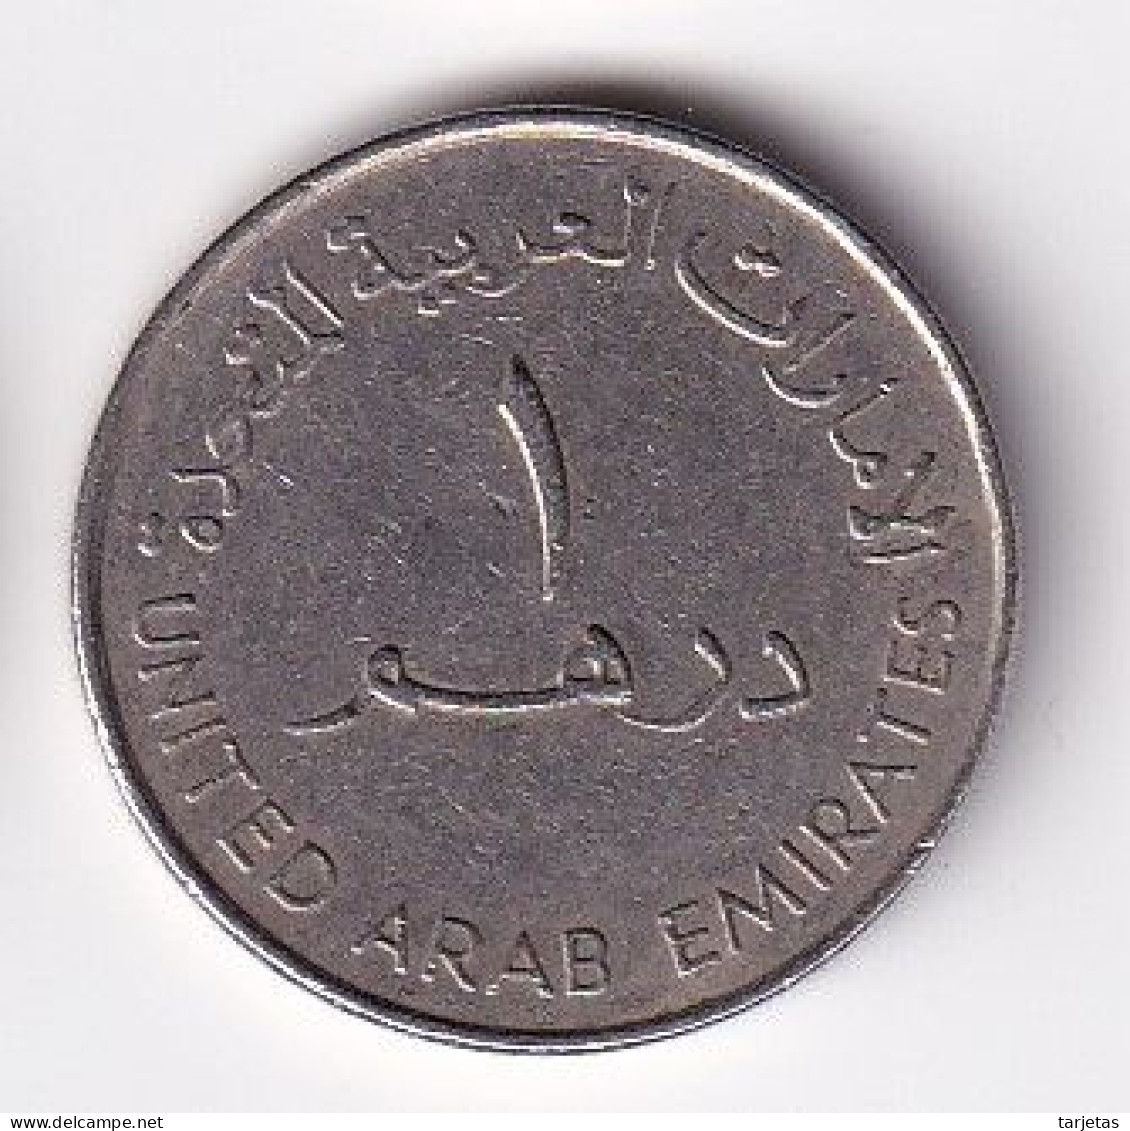 MONEDA DE EMIRATOS ARABES DE 1 DIRHAM DEL AÑO 1998 - 35 ANIV. BANK OF DUBAI (COIN) - Ver. Arab. Emirate